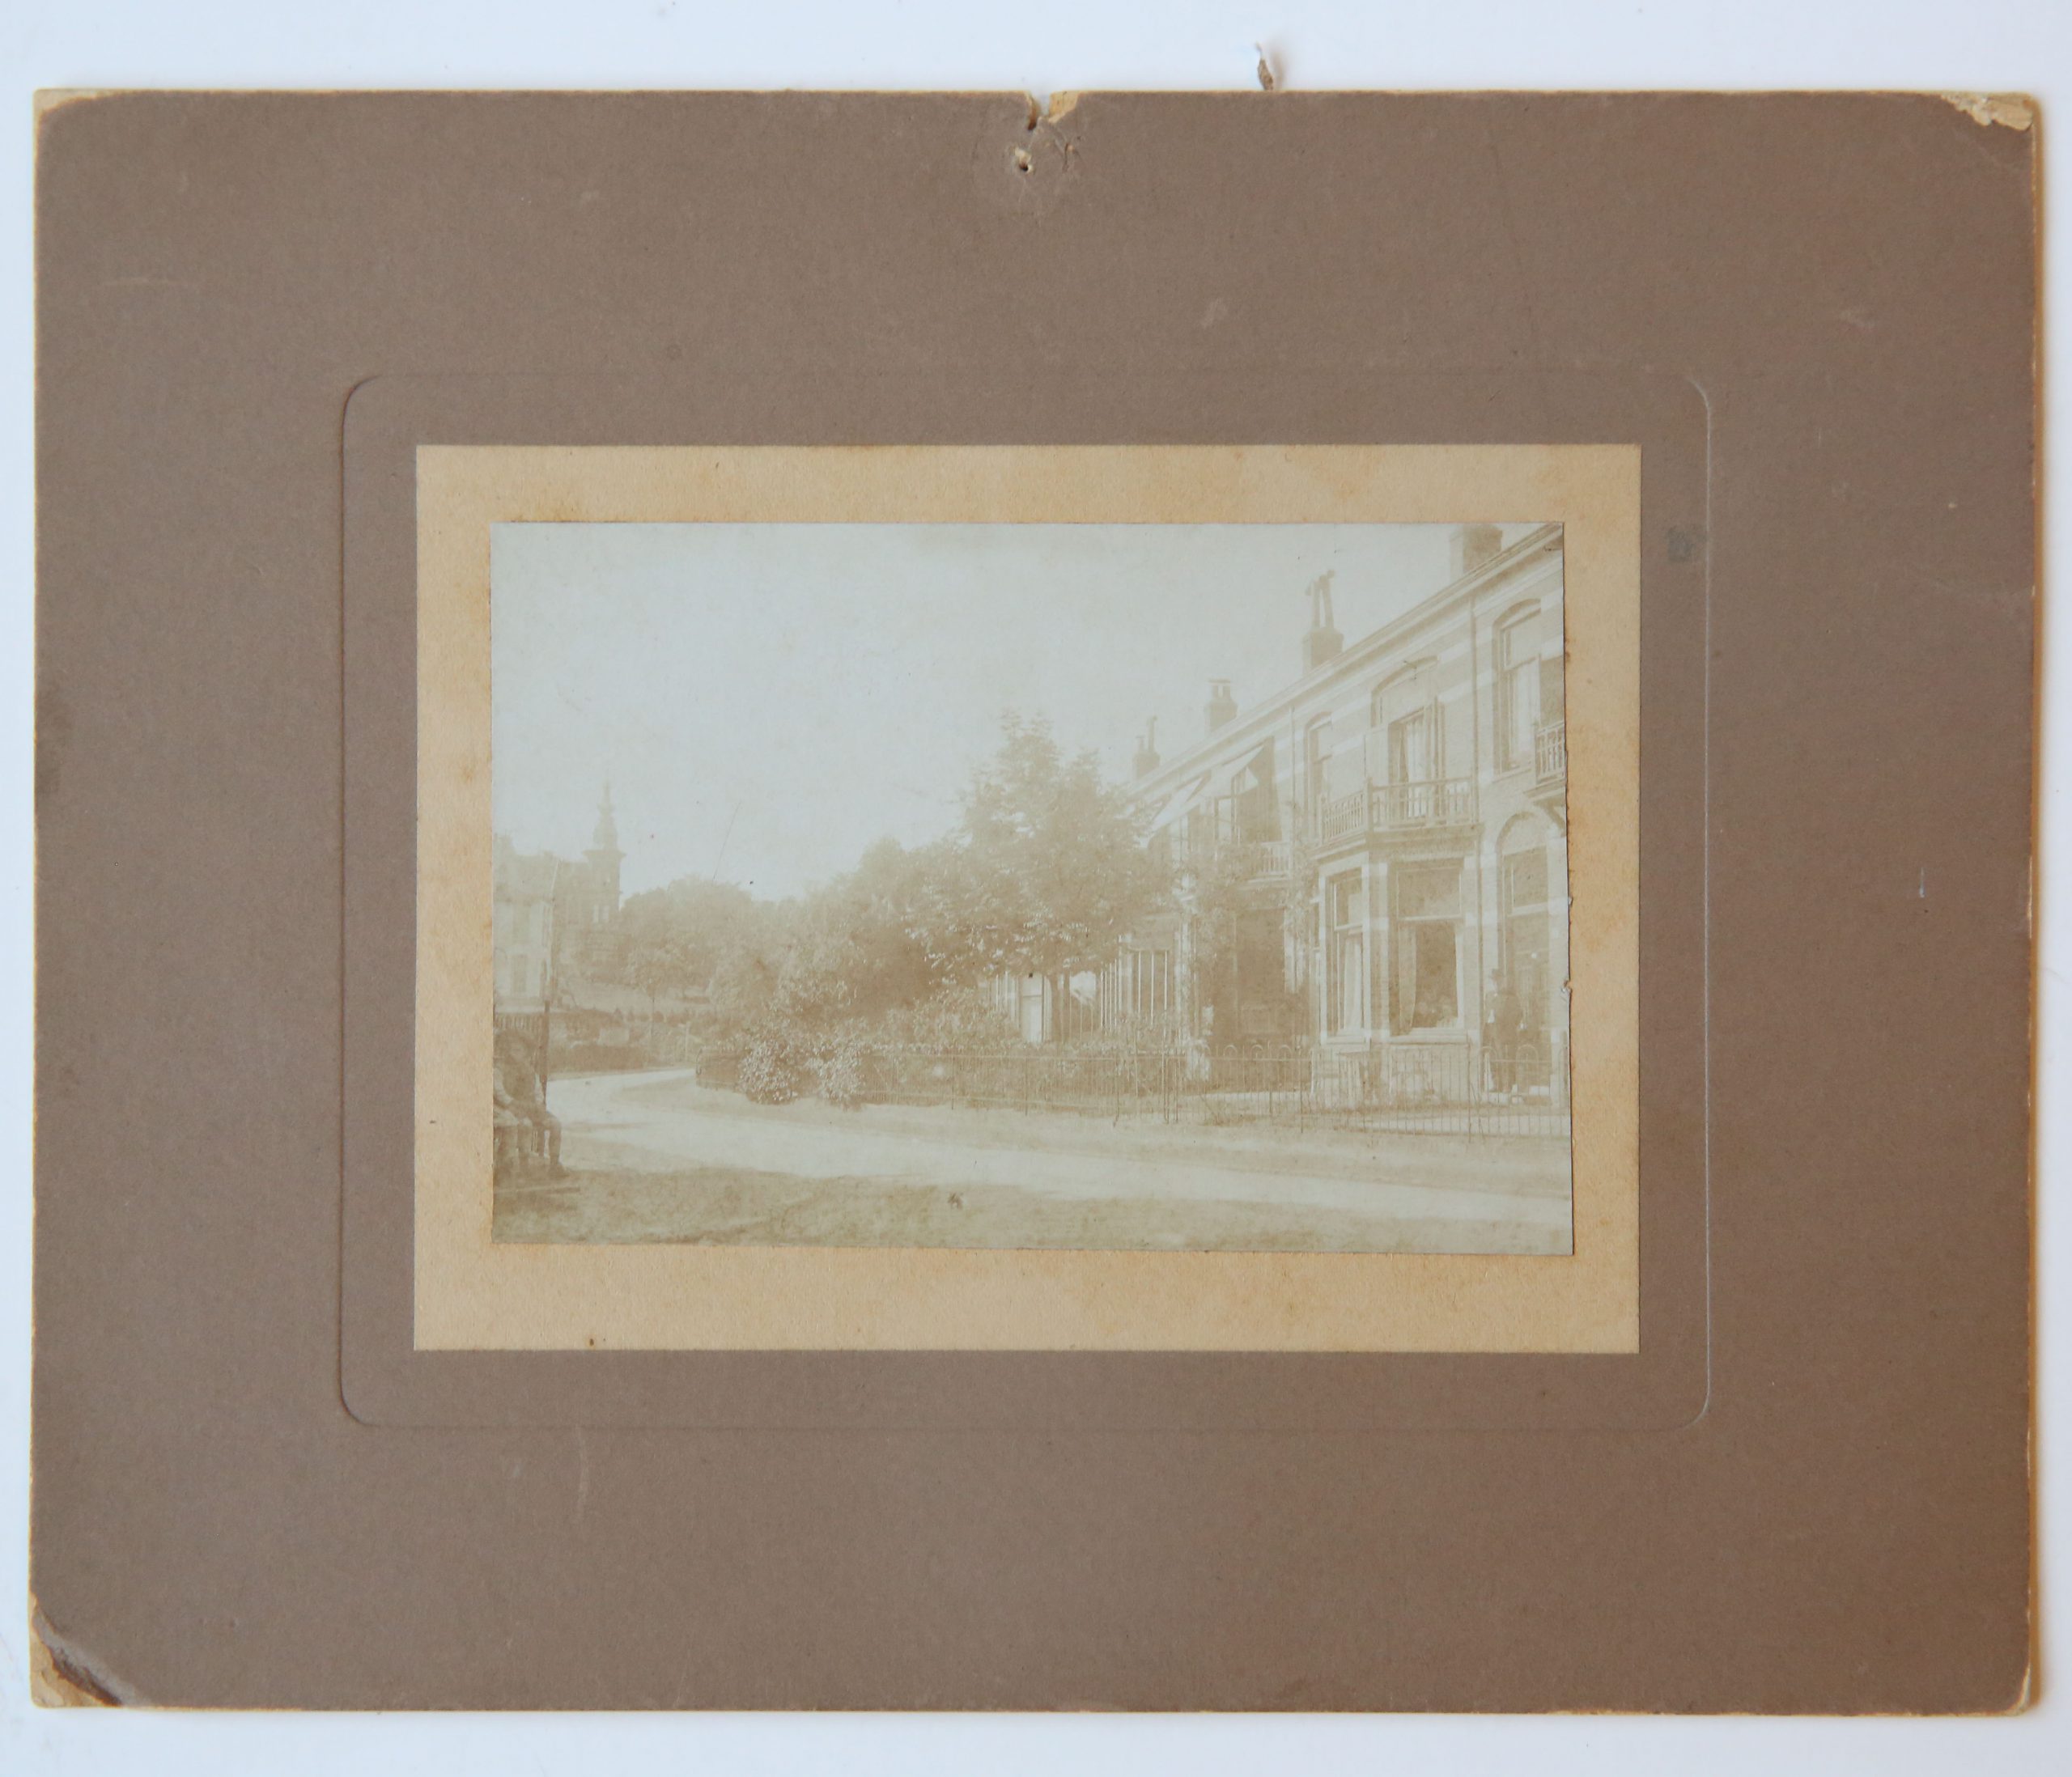  - Antique Photo of Bloemendaal, Prof. van Vlotenweg, Juni 1911.